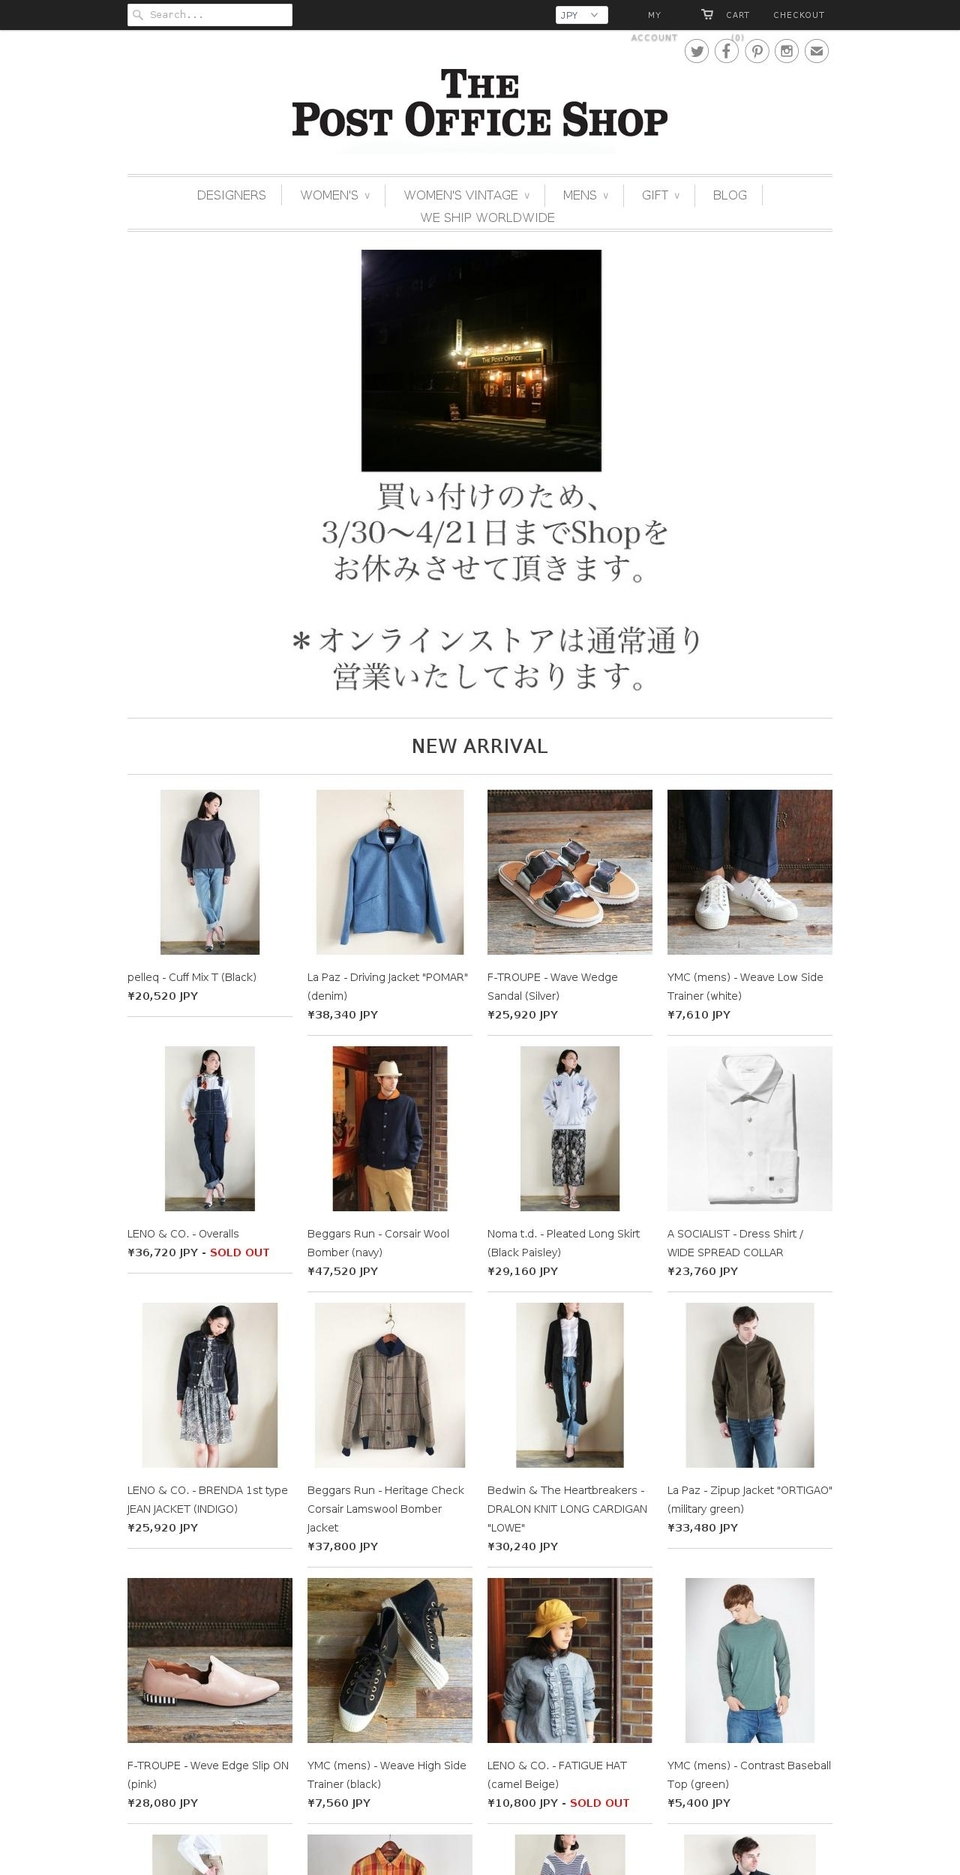 thepostoffice.jp shopify website screenshot